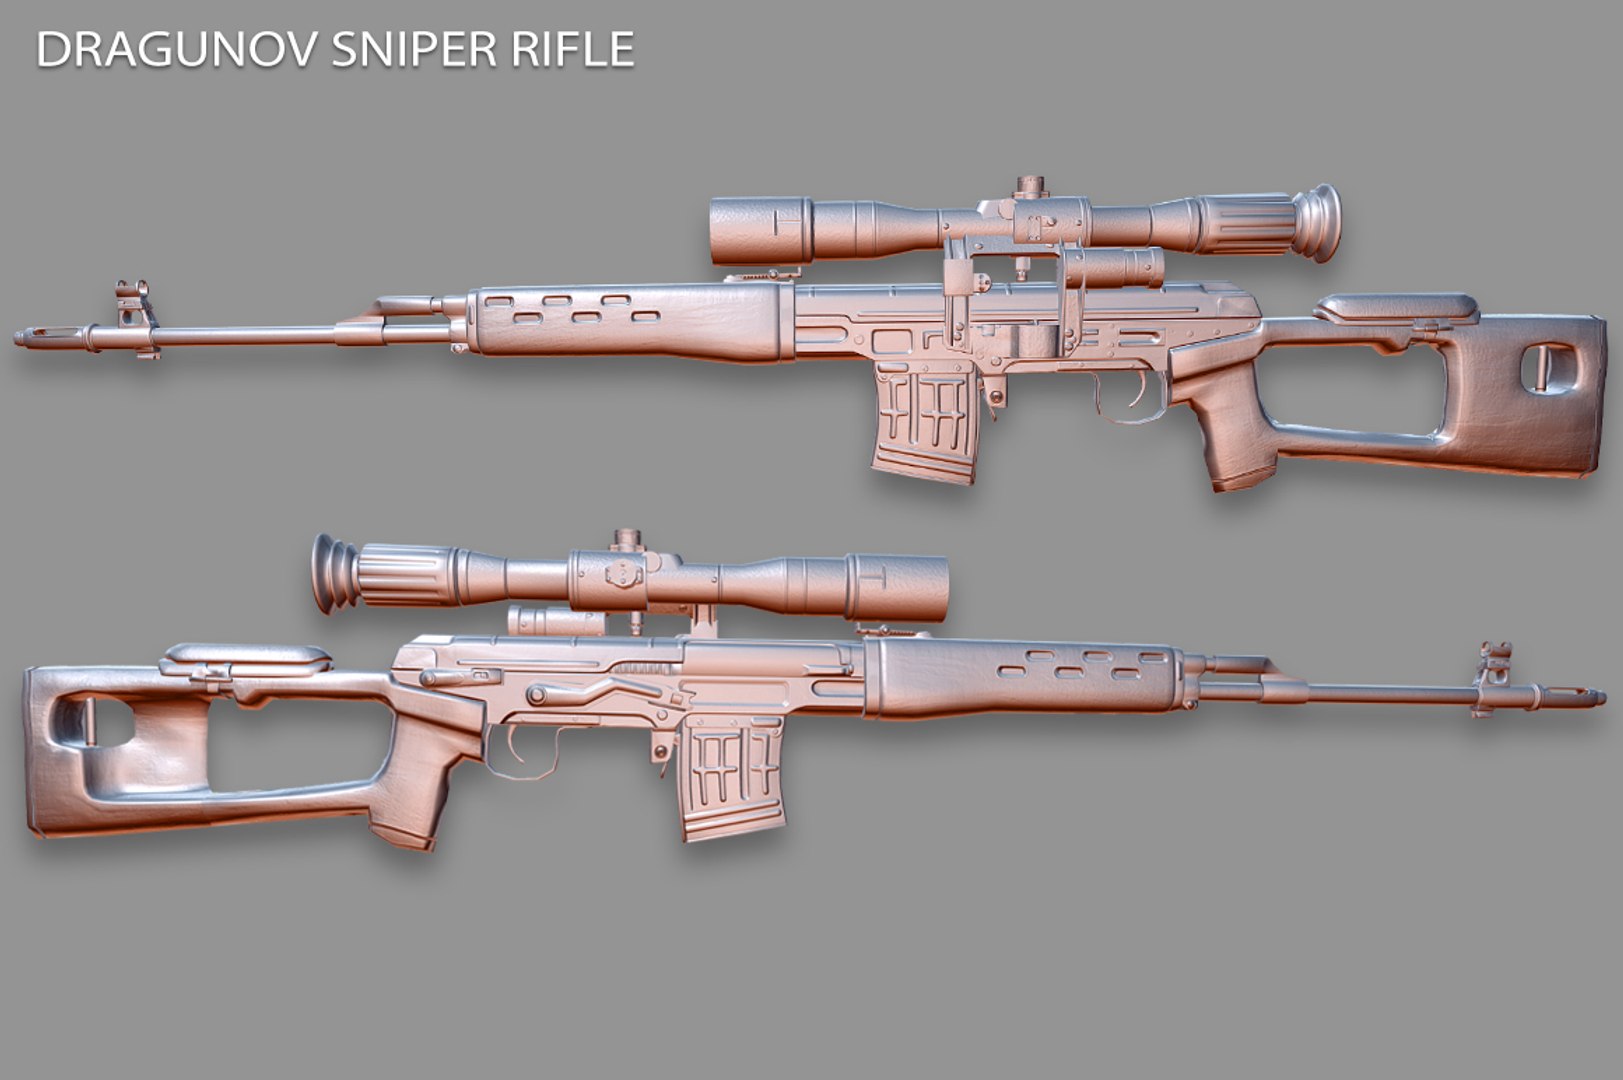 Макет свд. Снайперская винтовка референс. Референс снайперская Виновка. Снайперская винтовка СВД. 3д модели снайперских винтовок.